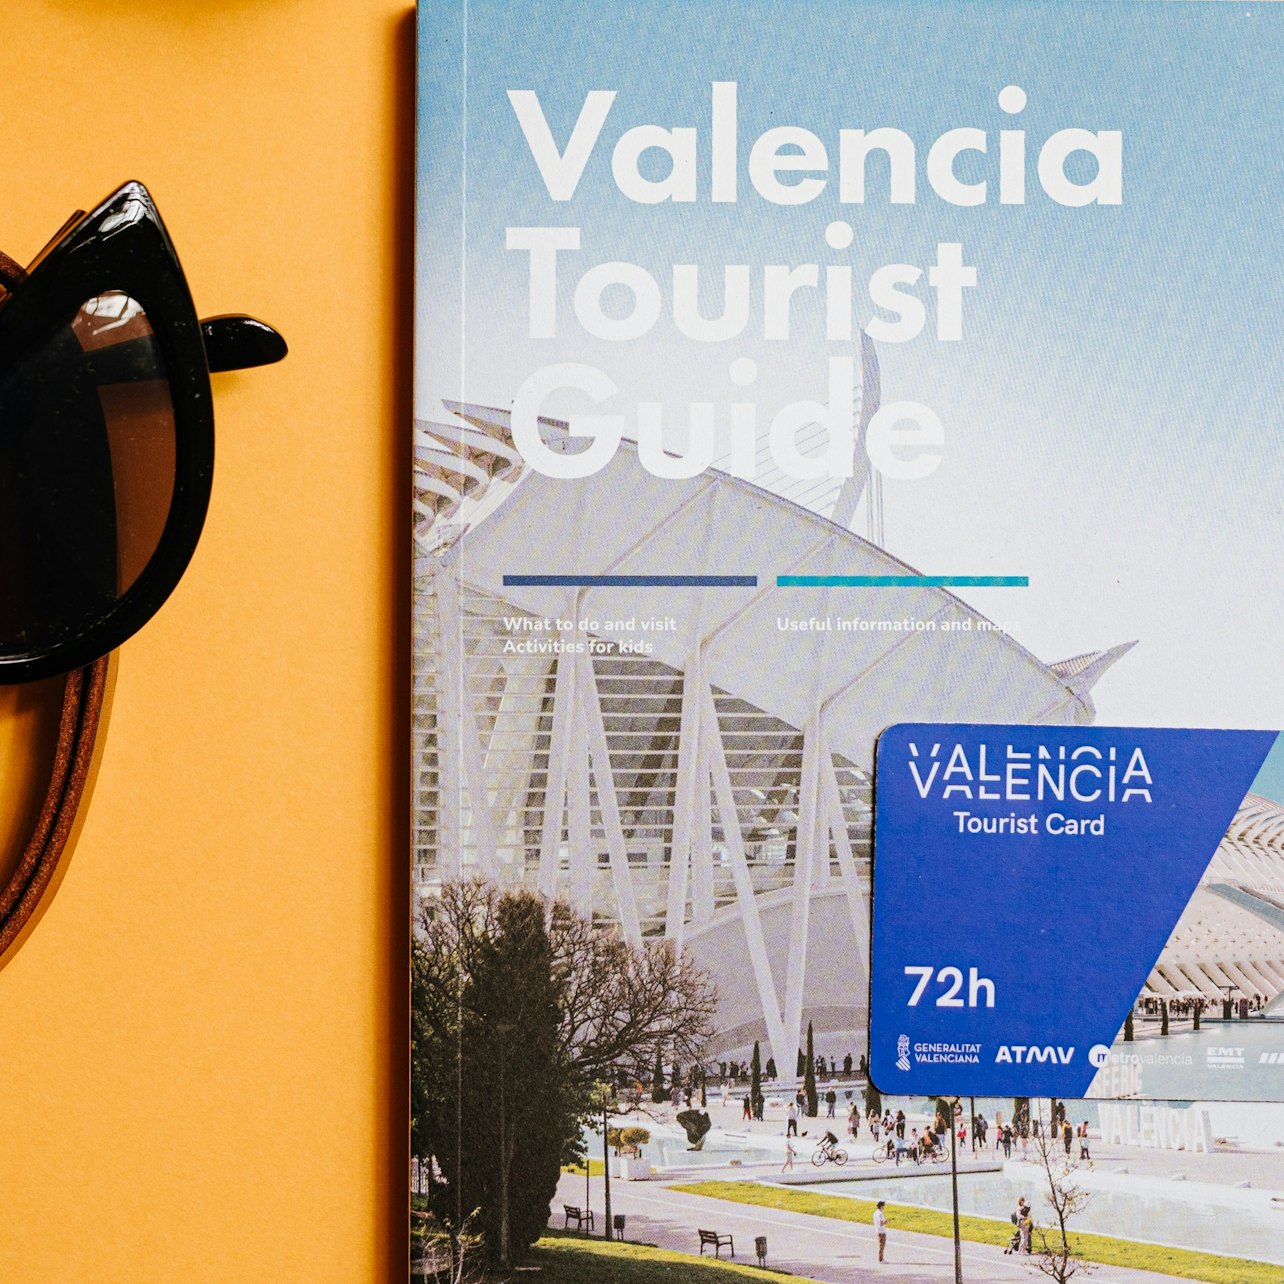 Valencia Tourist Card - Accommodations in Valencia